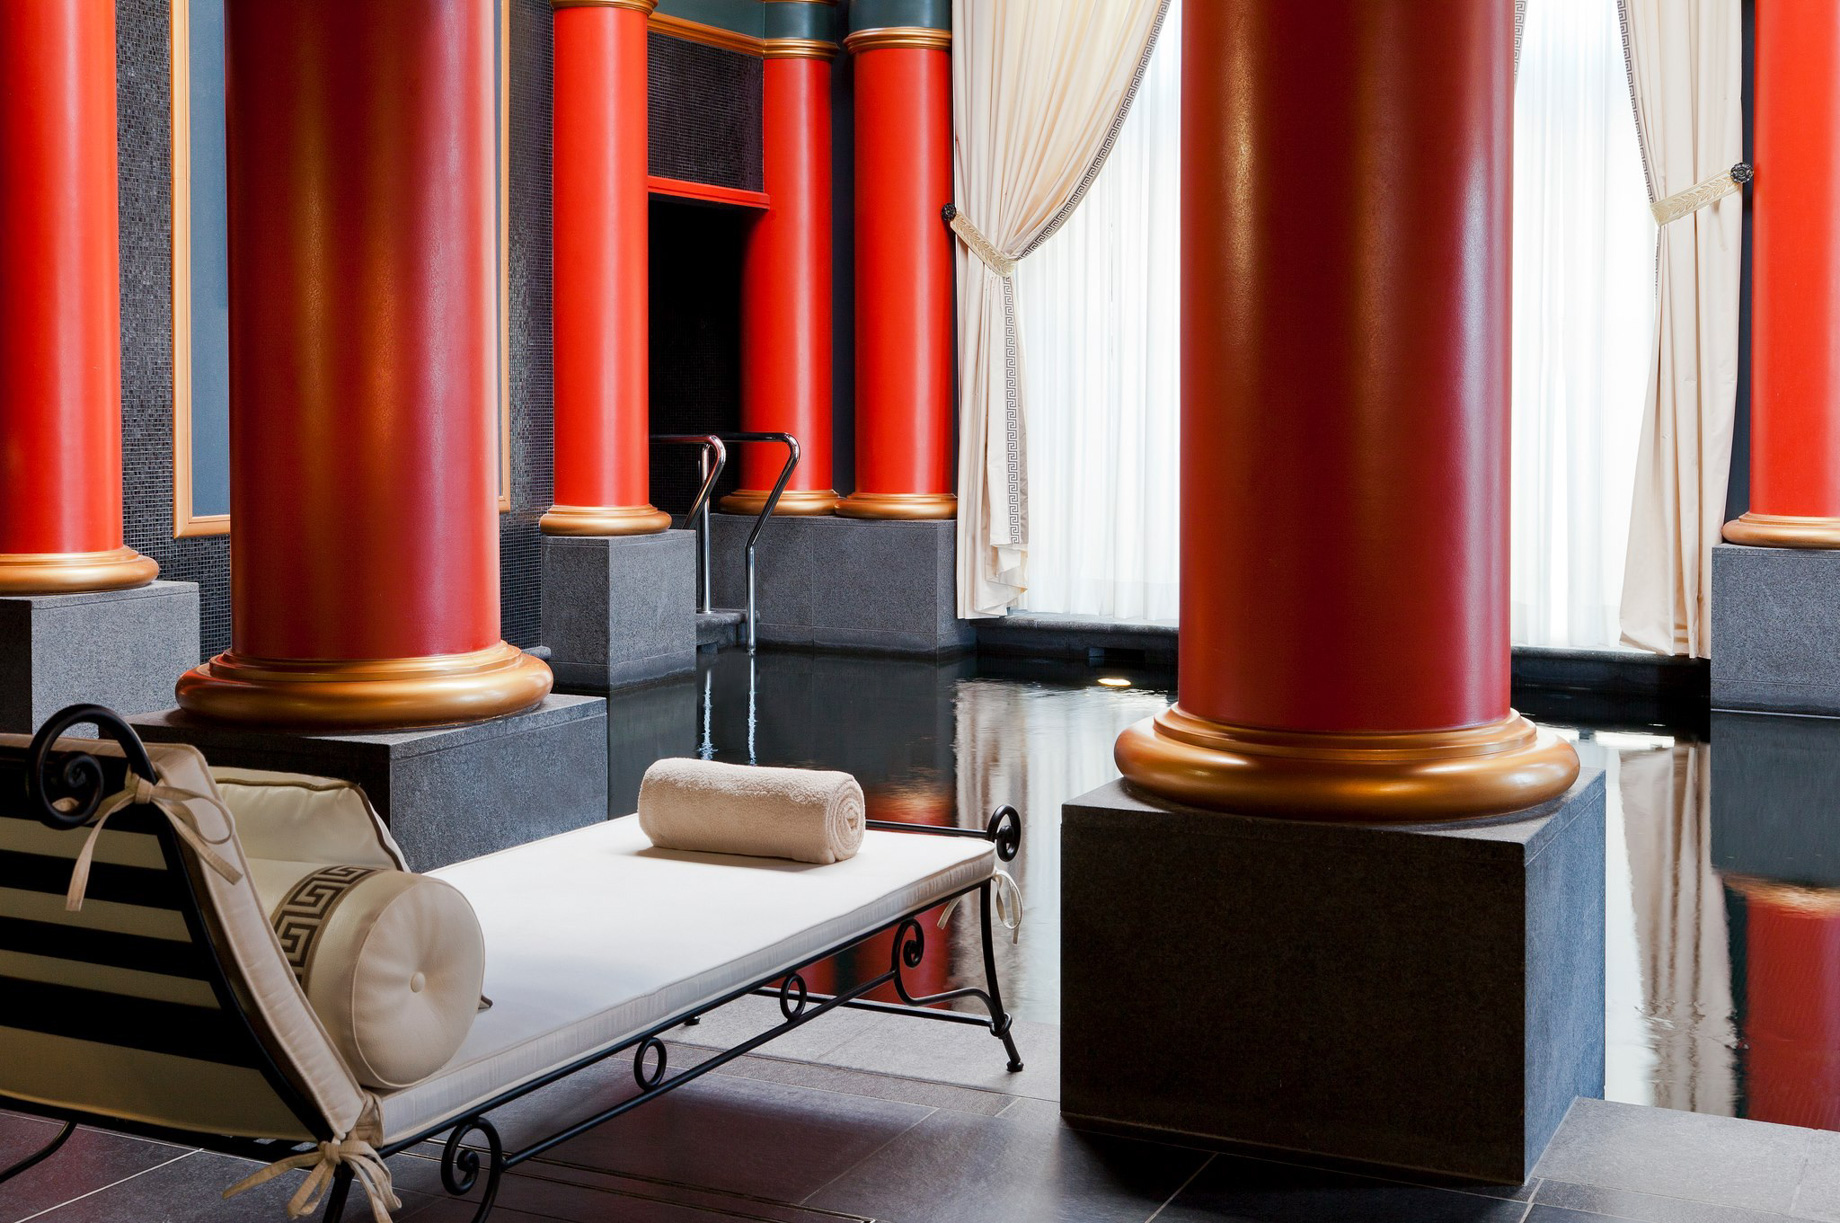 InterContinental Bordeaux Le Grand Hotel – Bordeaux, France – Spa Guerlain Relaxation